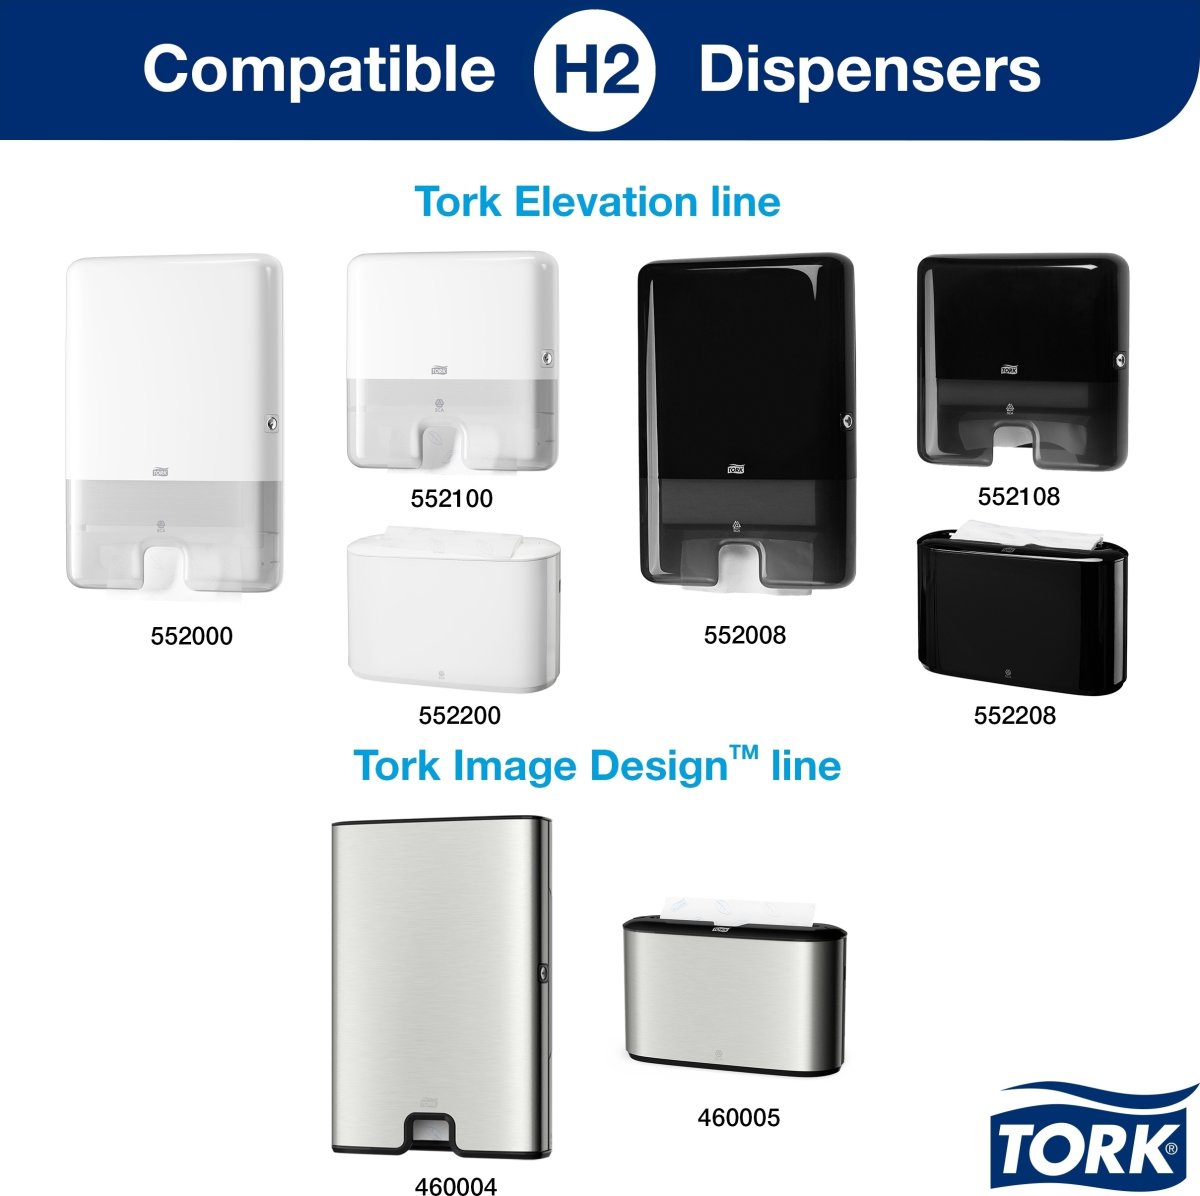 Tork H2 Xpress Premium Håndklædeark 3-fold 21 pk